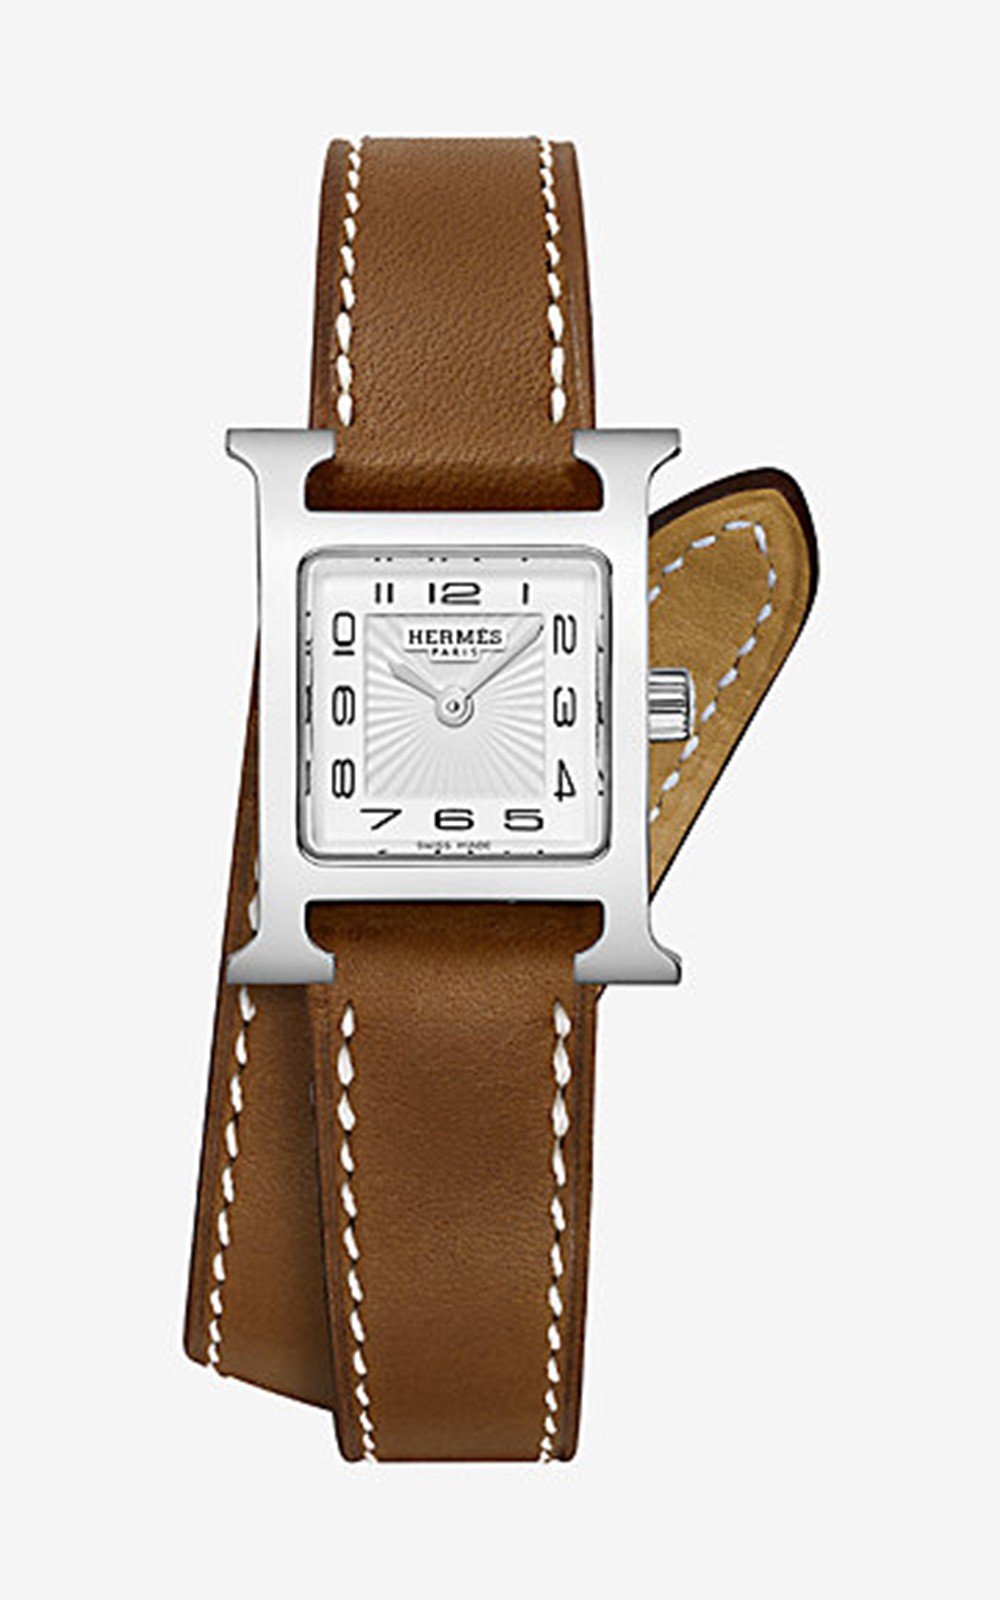 Đồng hồ Hermes Heure H watch, 17.2 x 17.2 mm W037962WW00 likewatch.com